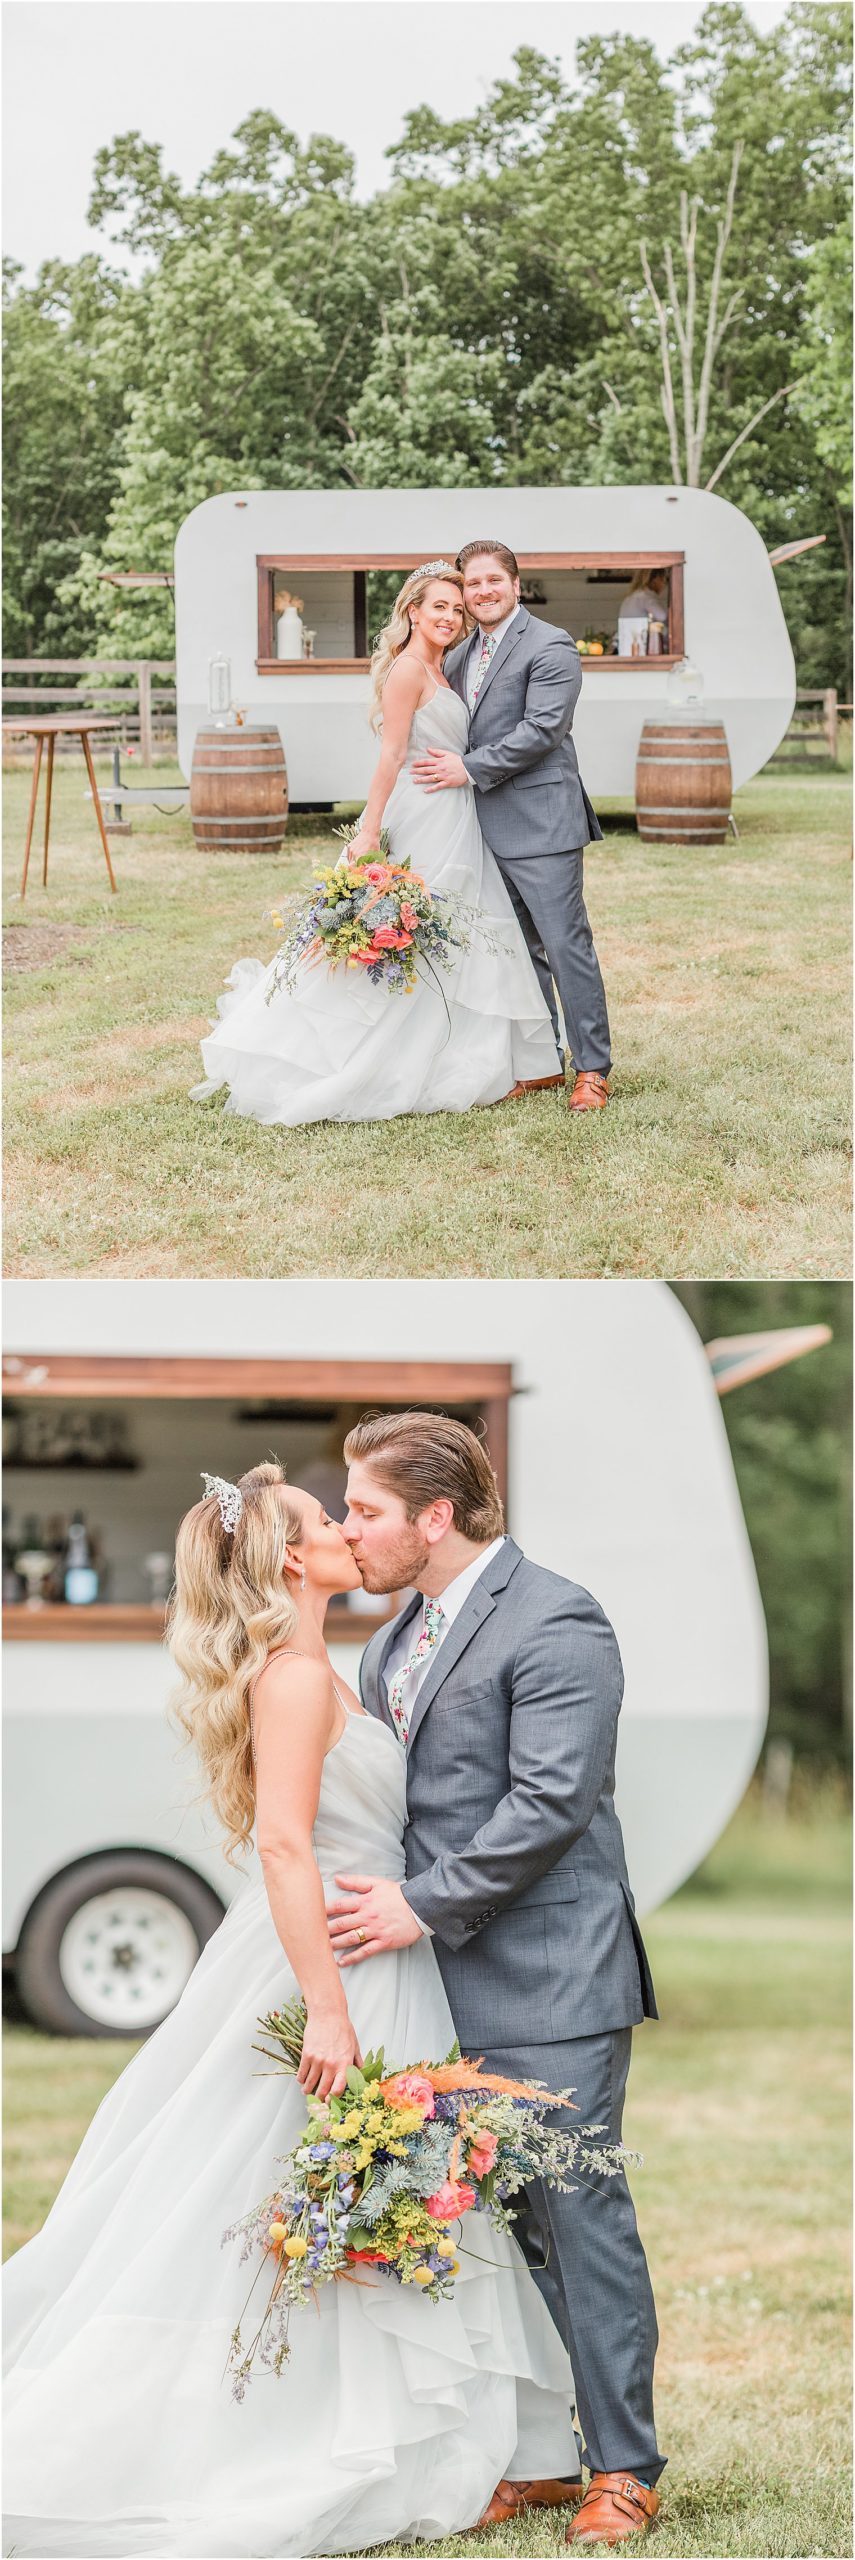 Bride + Groom kiss in front of food truck at outdoor wedding